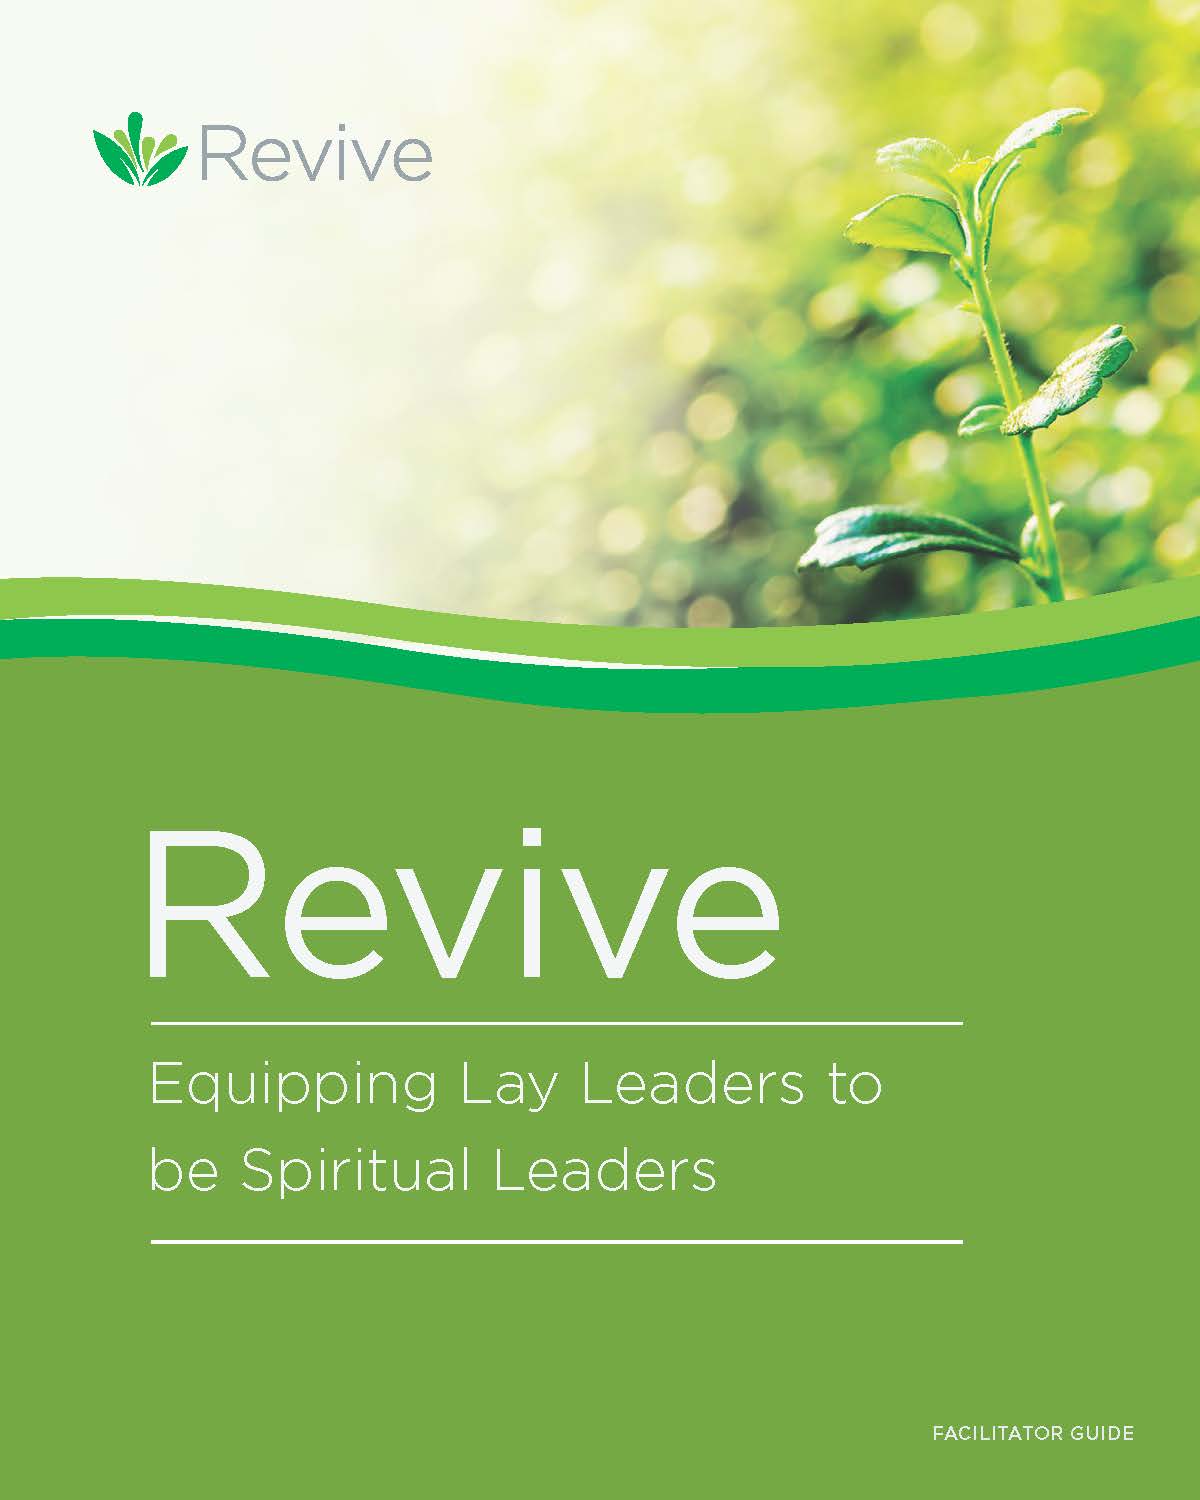 Revive - Small-group discipleship program